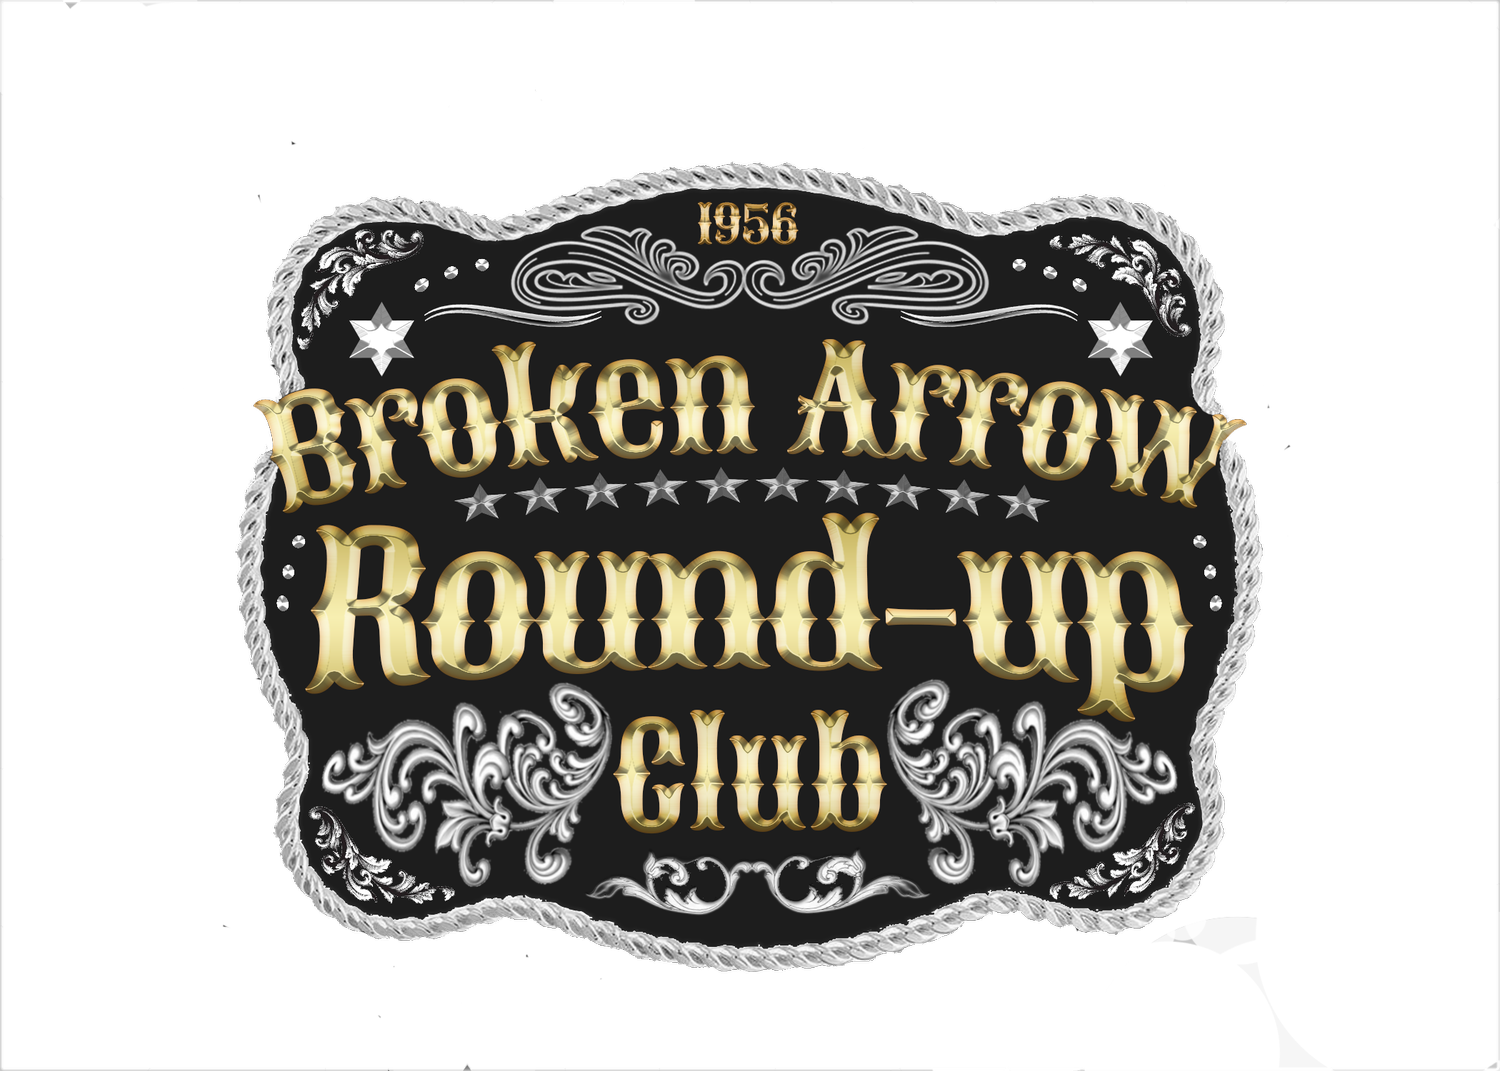 Broken Arrow Round-up Club